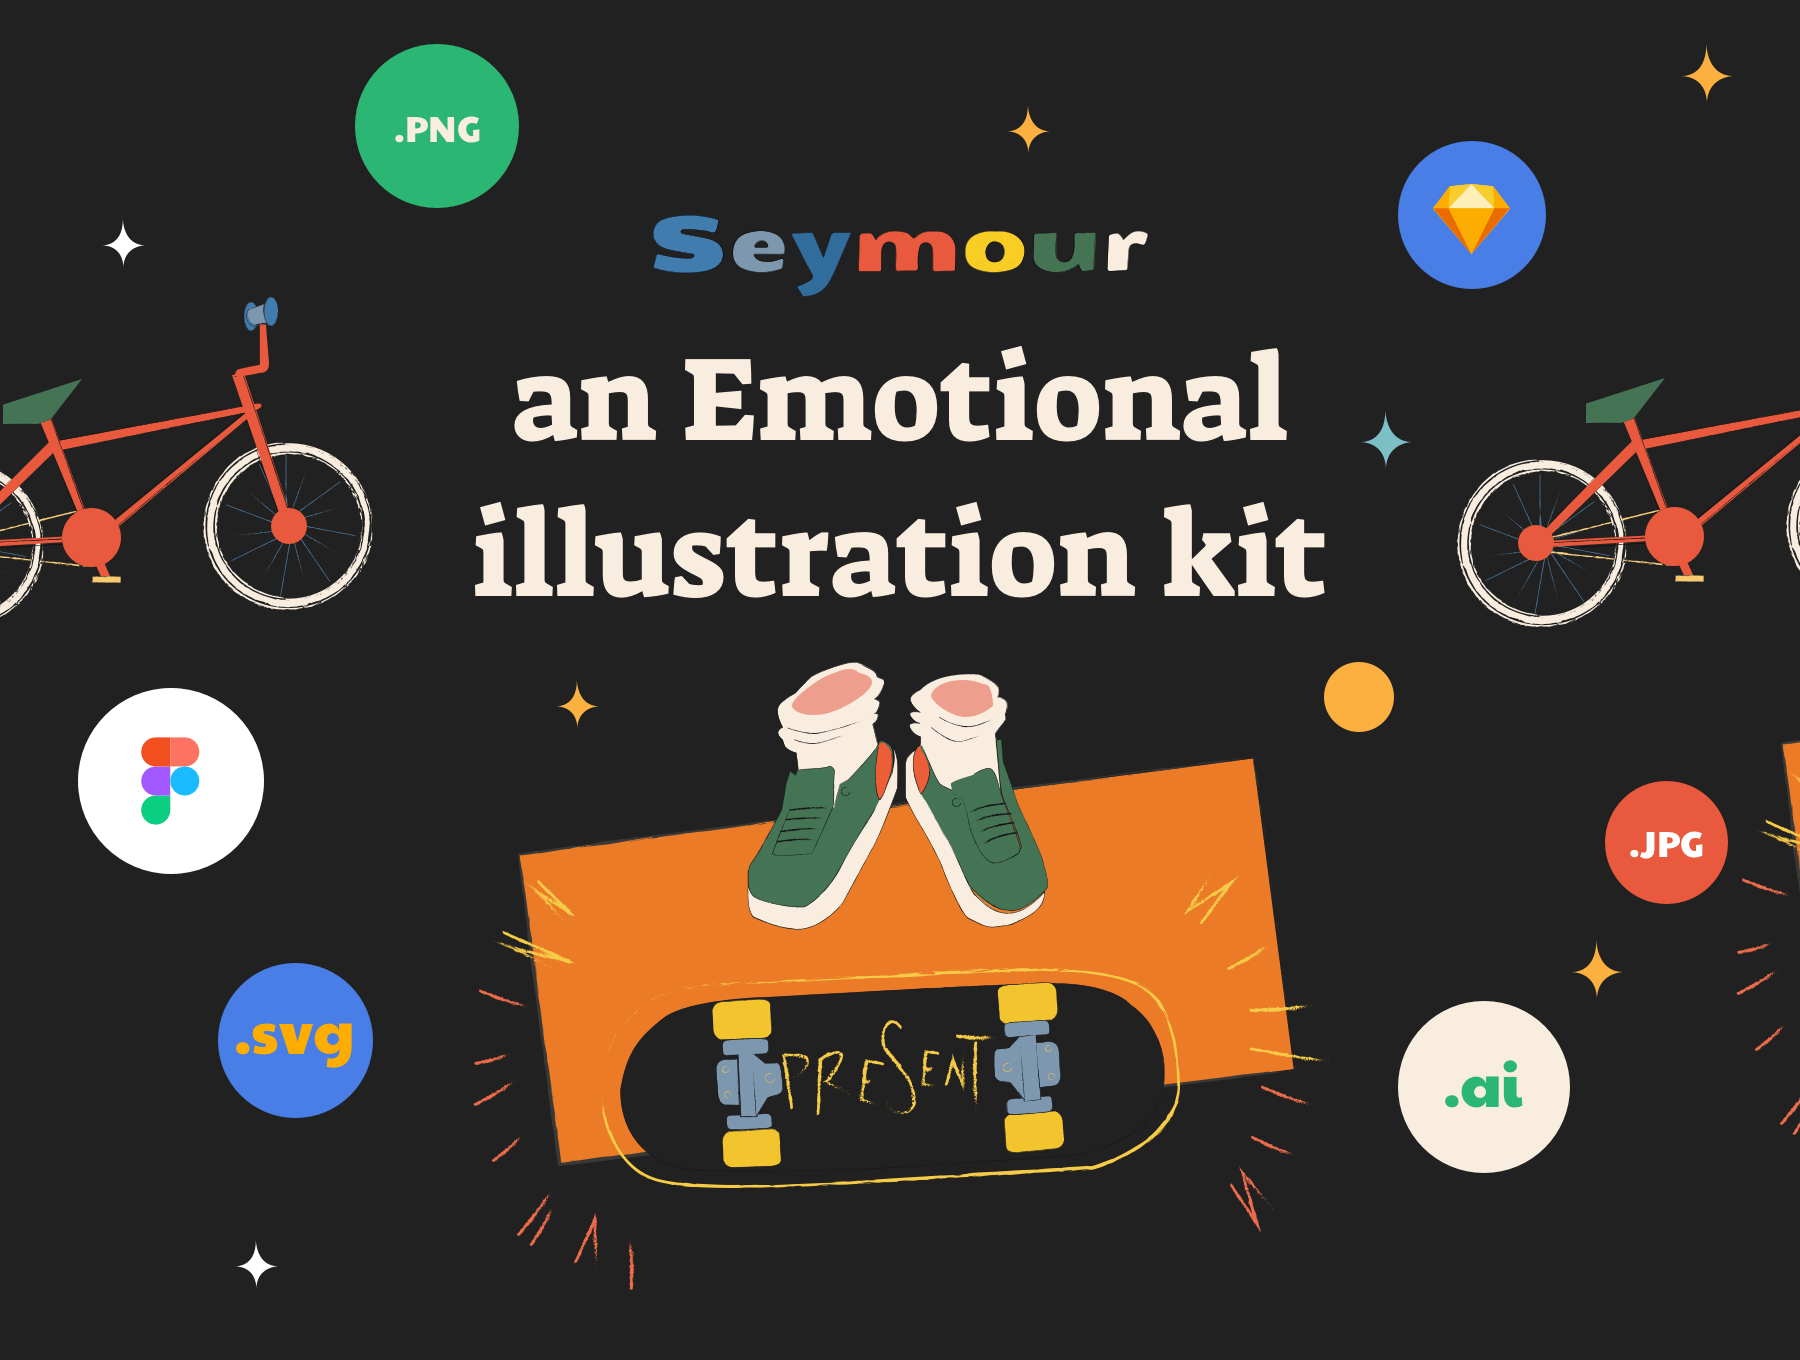 创意类空状态素材模板素材下载Saymour – an Emotional illustration kit插图